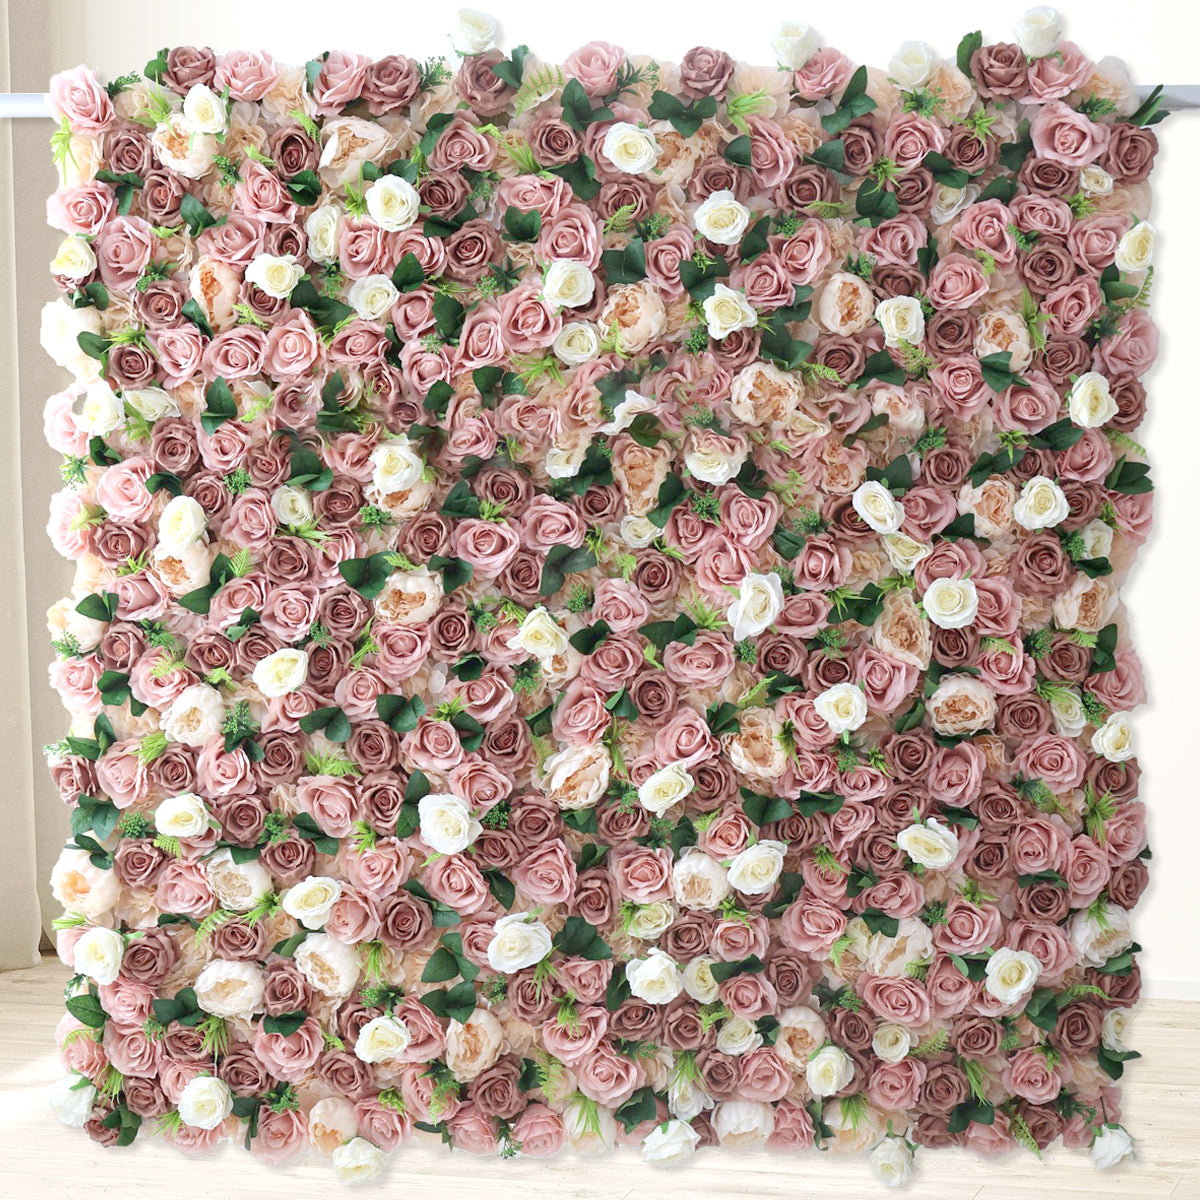 3D Artificial Flower Wall Arrangement Wedding Party Birthday Backdrop Decor HQ1322